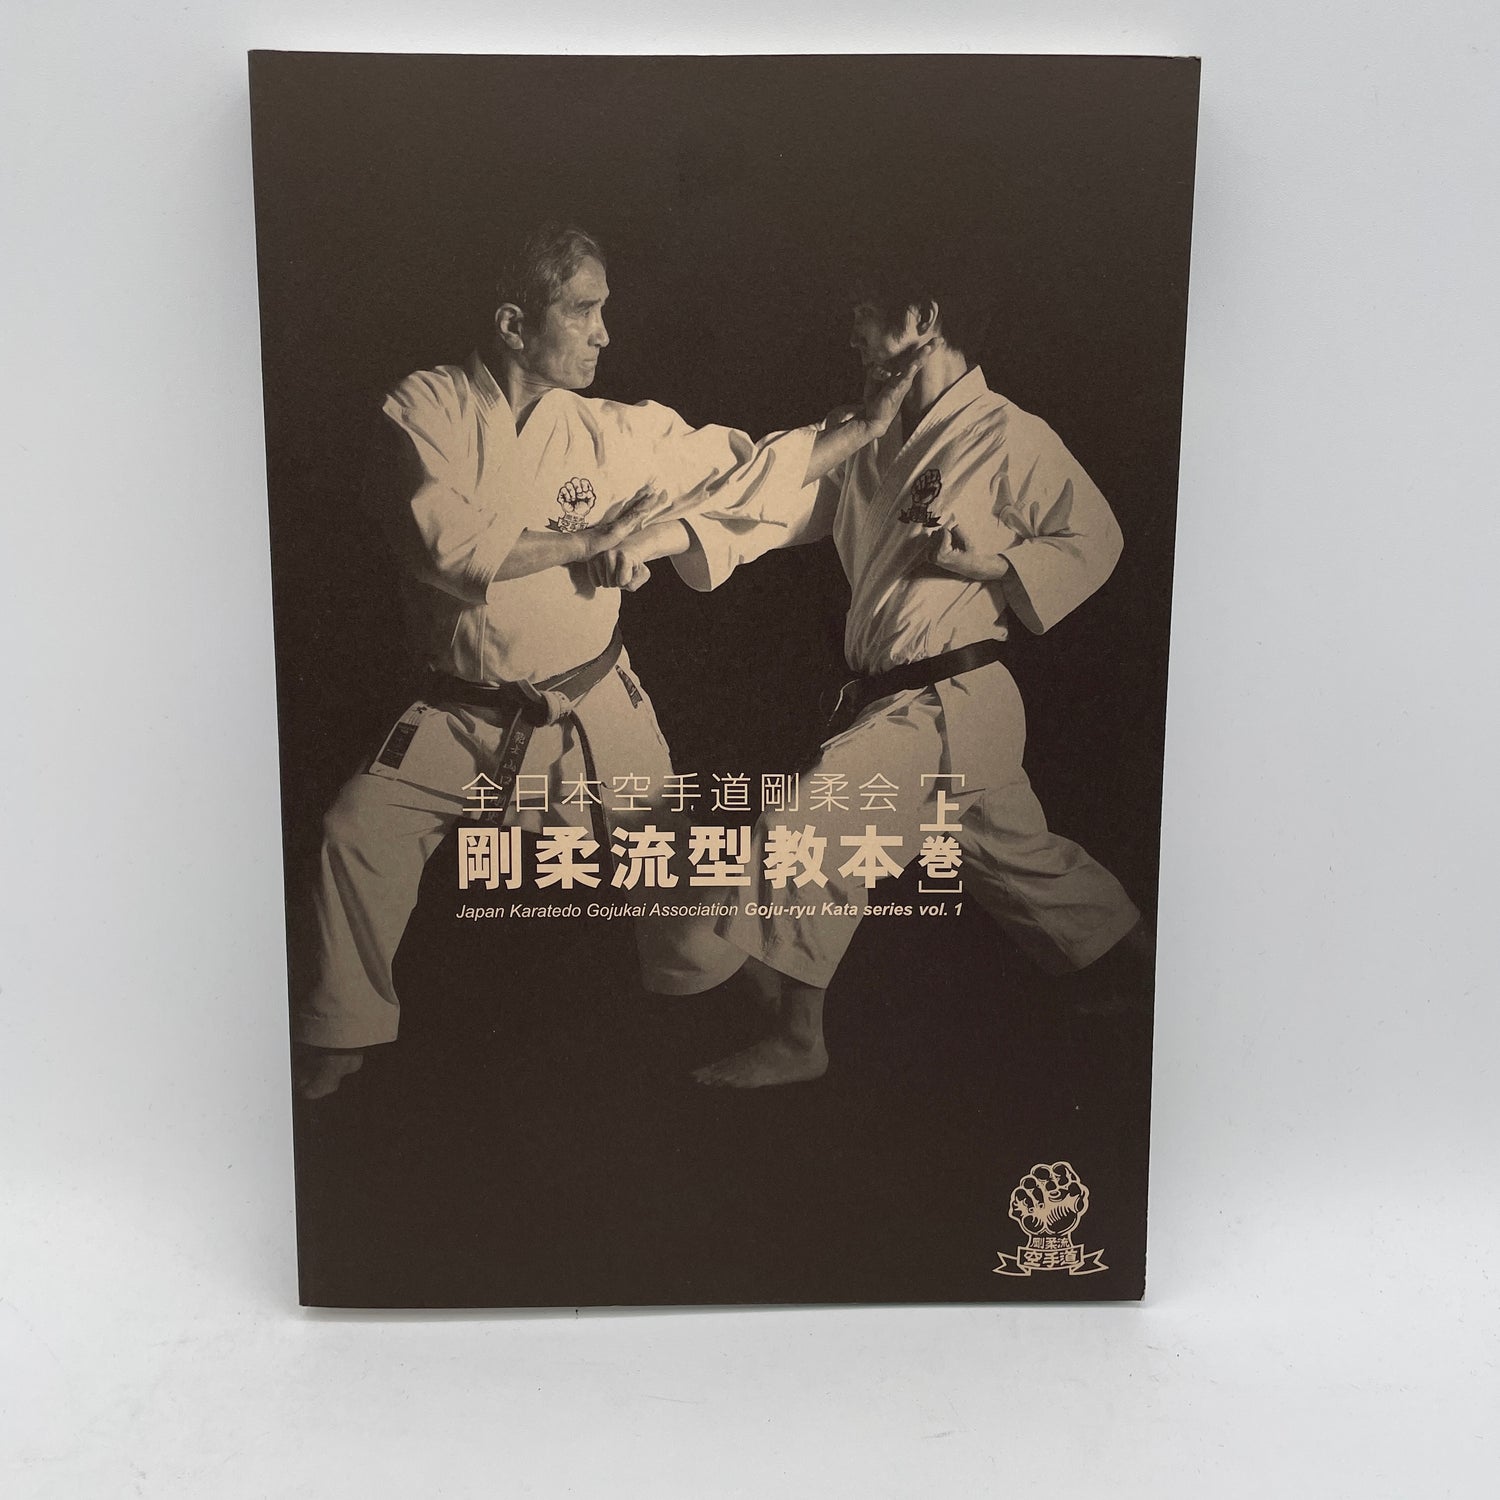 Goju Ryu Kata Series Book 1 by Japan Karatedo Gojukai Association